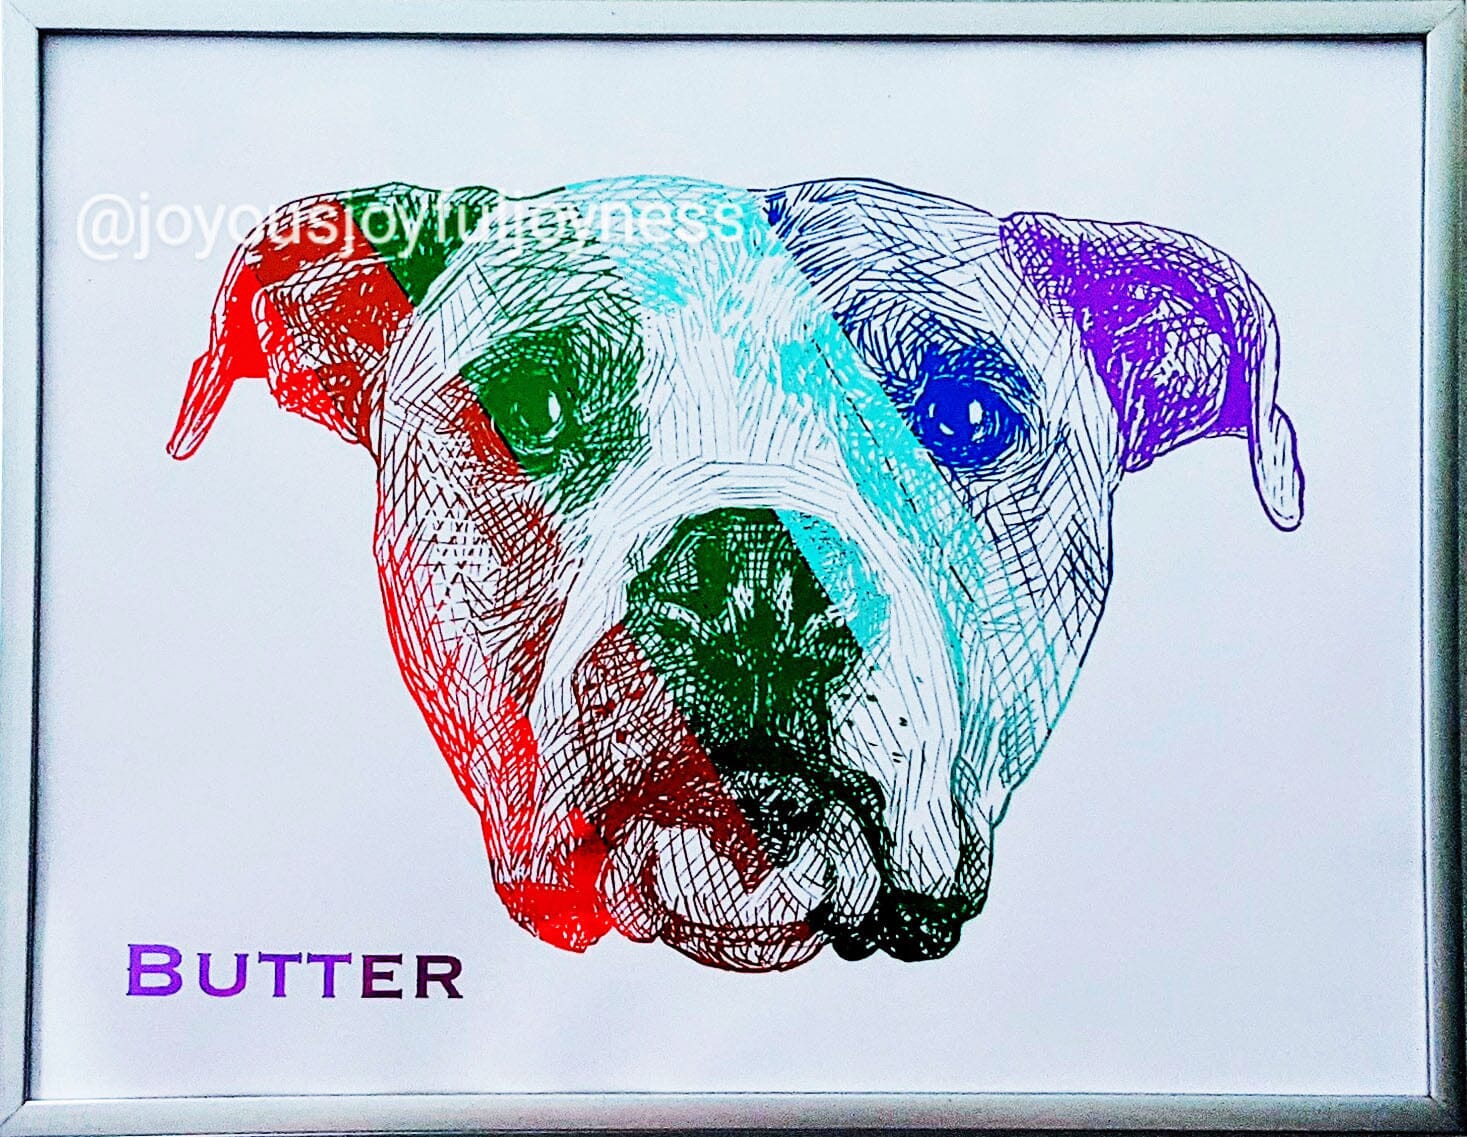 Portfolio: Butter (Not for sale) Posters, Prints, & Visual Artwork JoyousJoyfulJoyness 